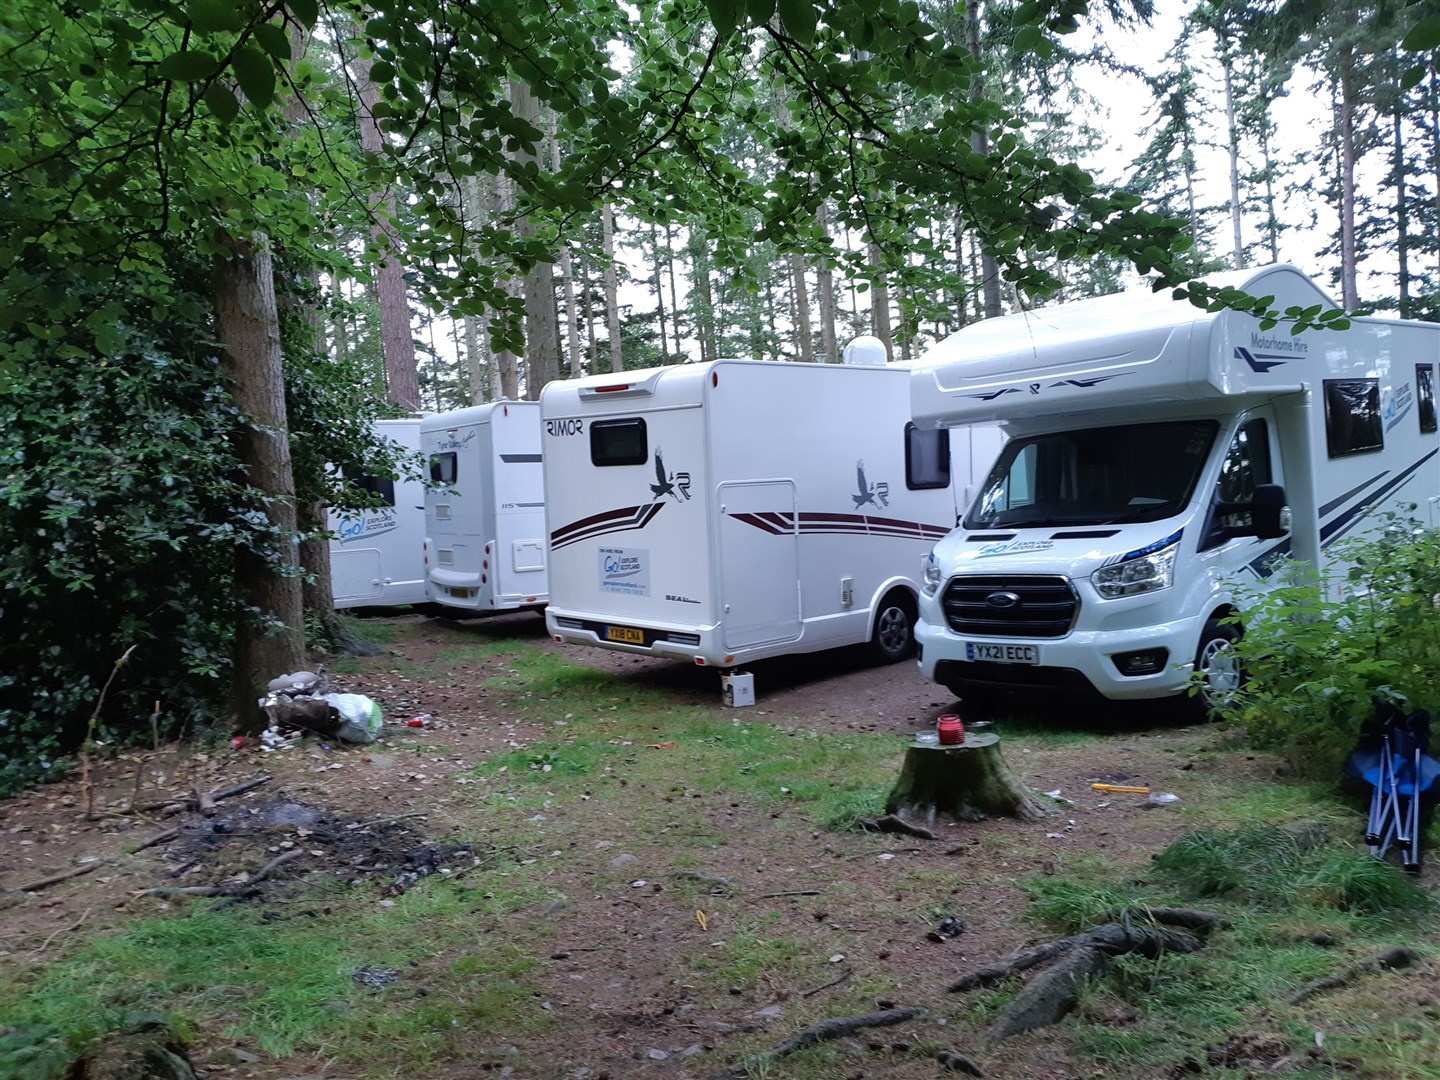 Campervans at Culloden Woods.